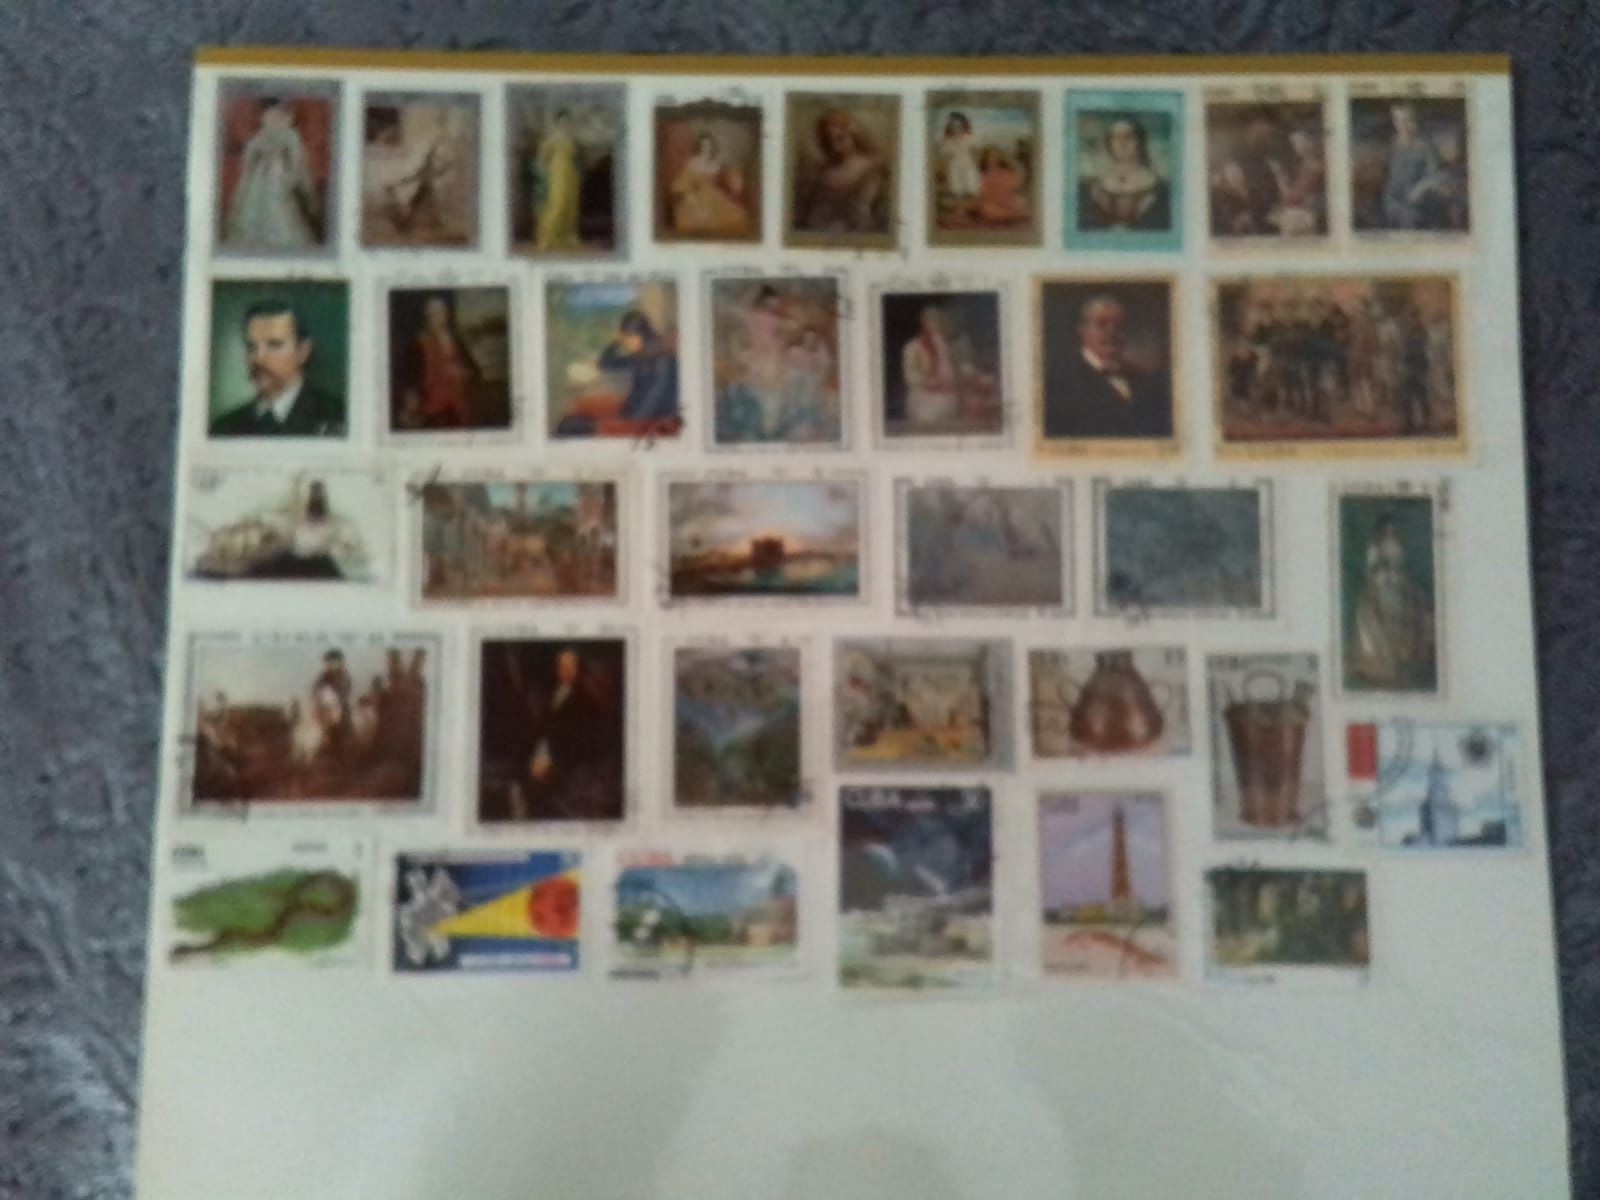 541 броя пощенски марки